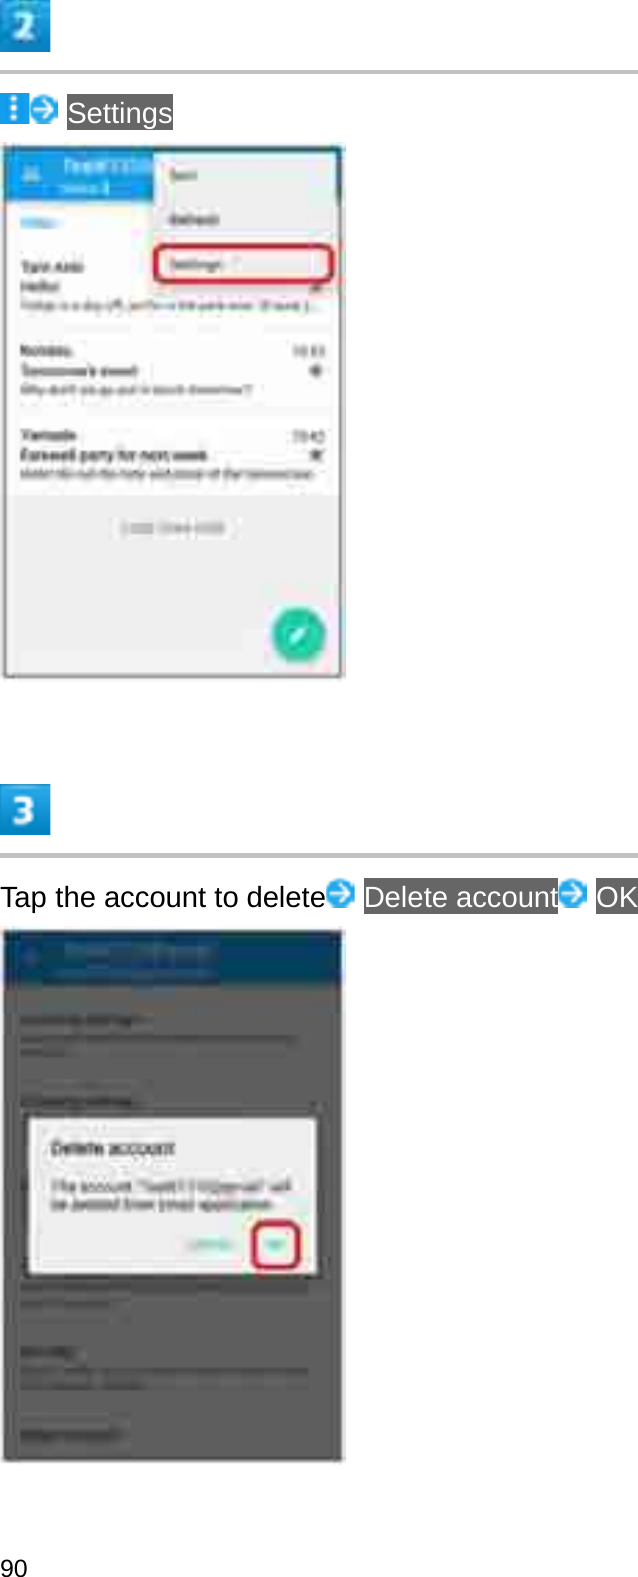 SettingsTap the account to delete Delete account OK90